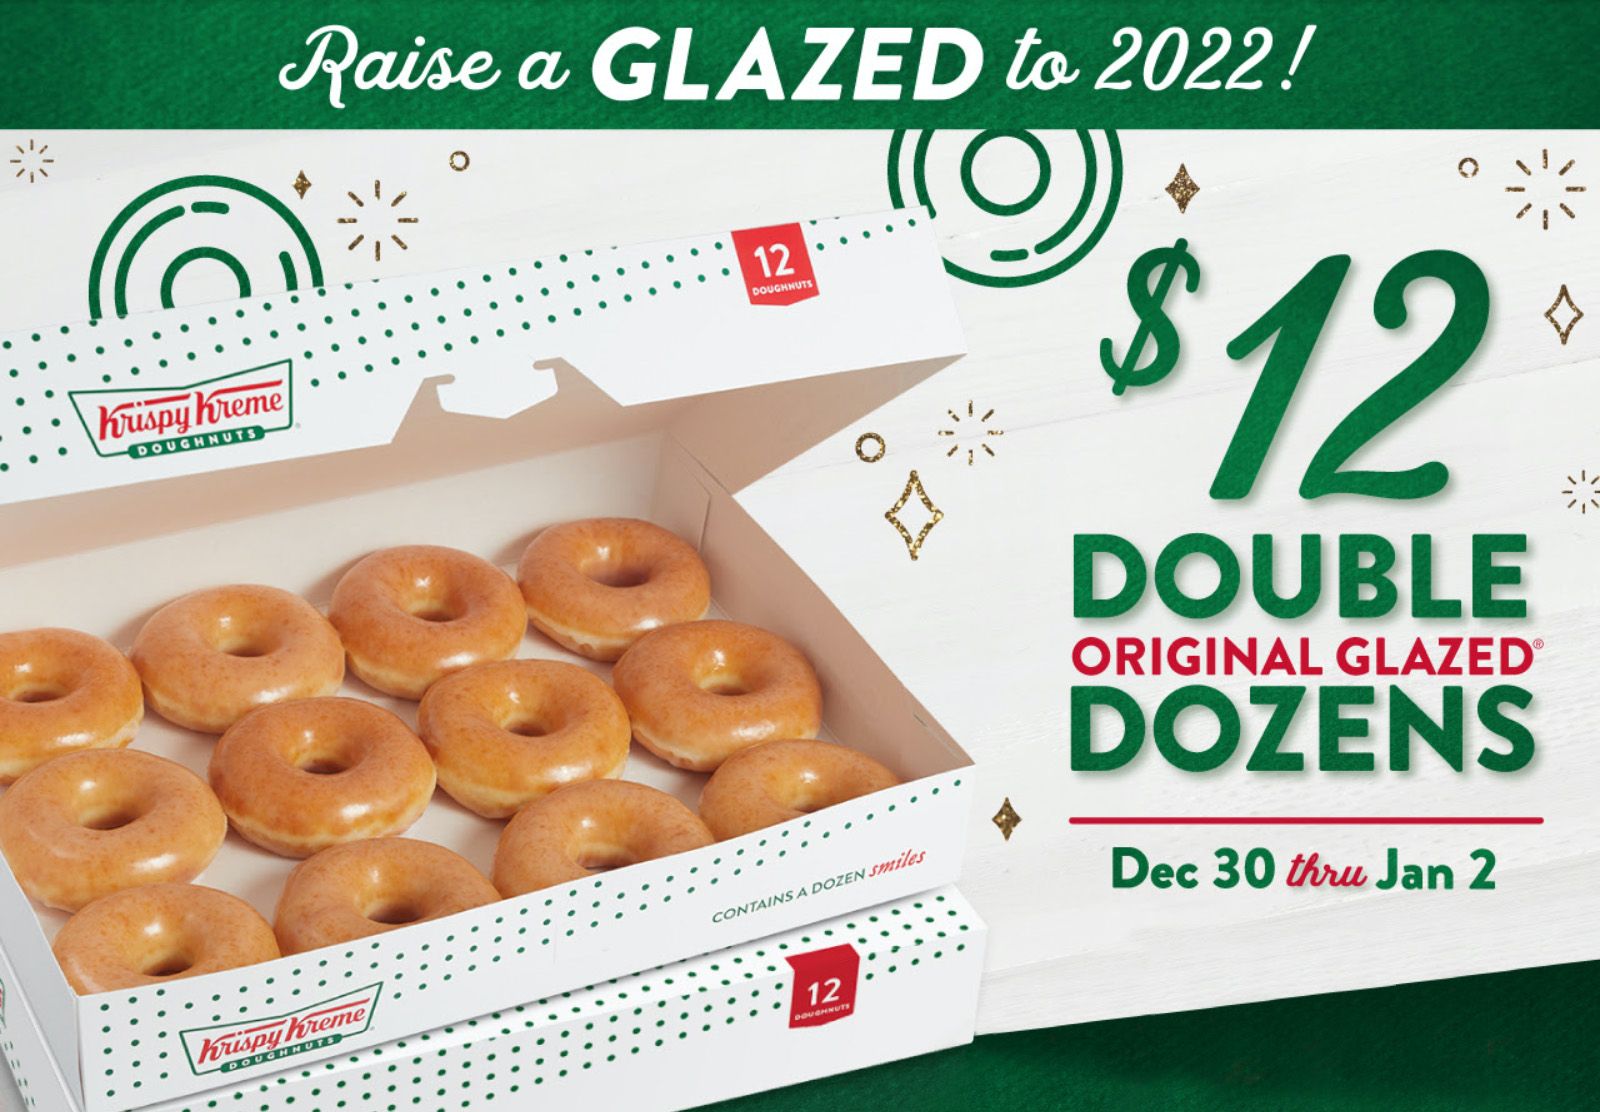 2 Original Glazed Dozens are Only $12 Over New Years at Krispy Kreme